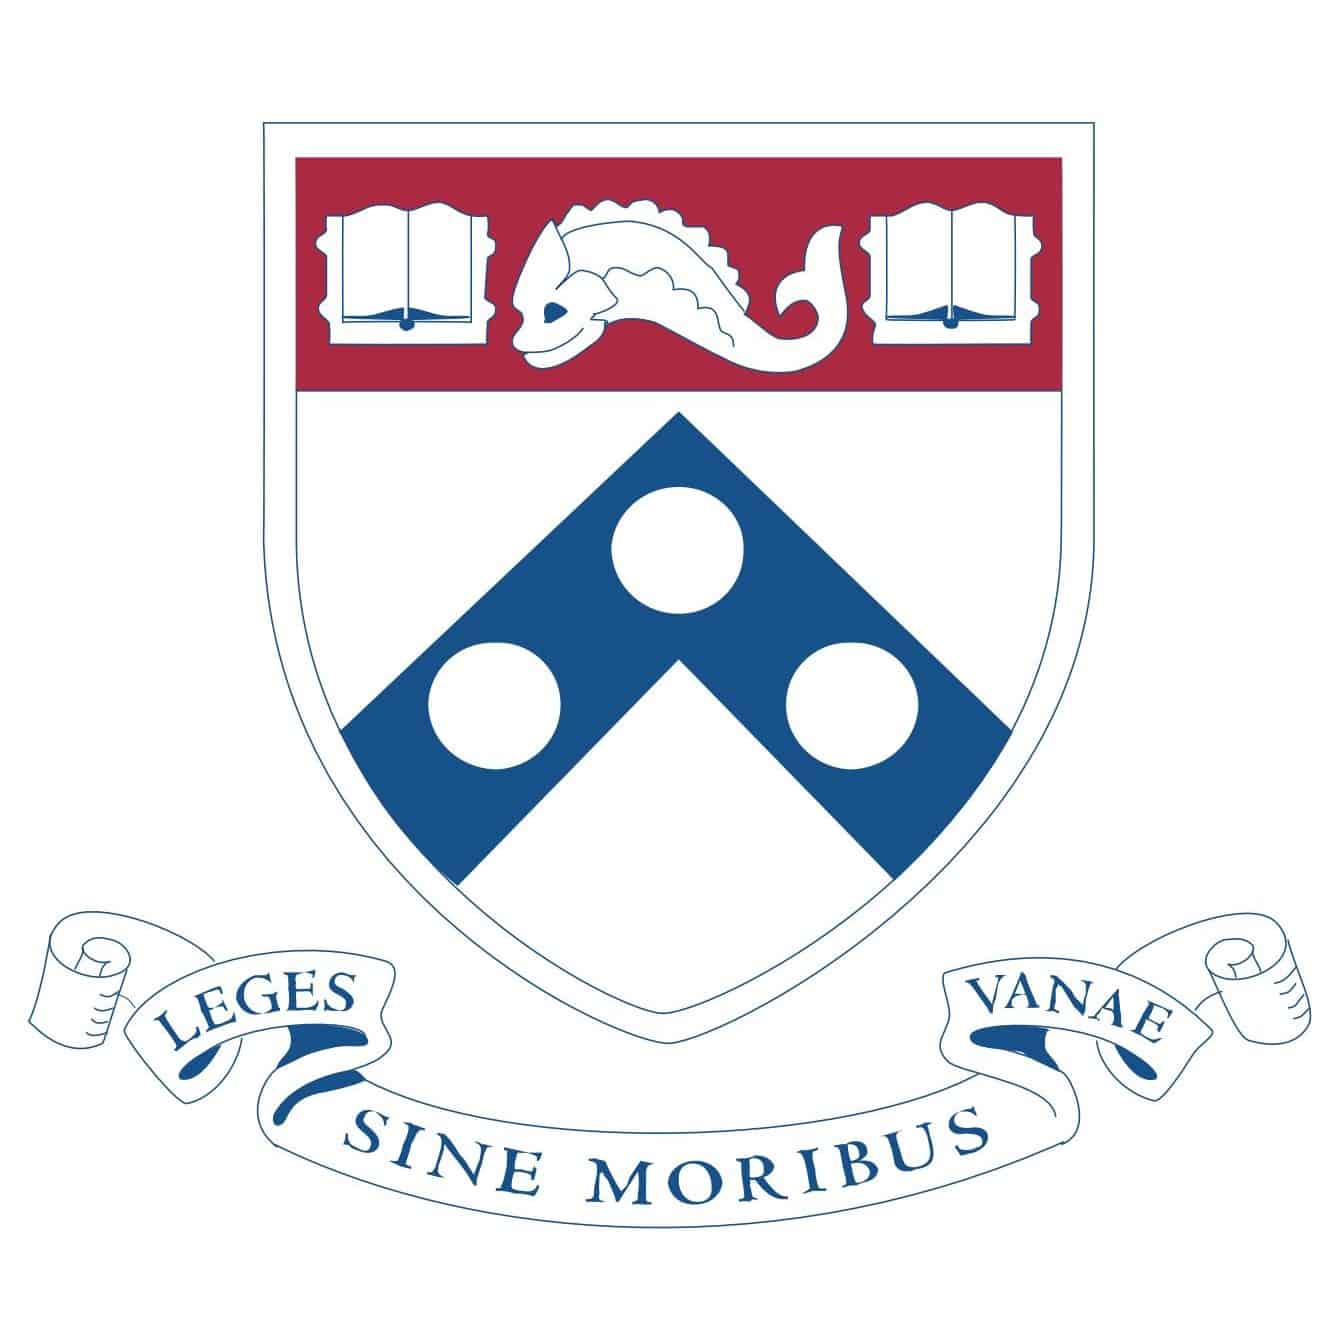 Penn Logo University of Pennsylvania Coat of Arms